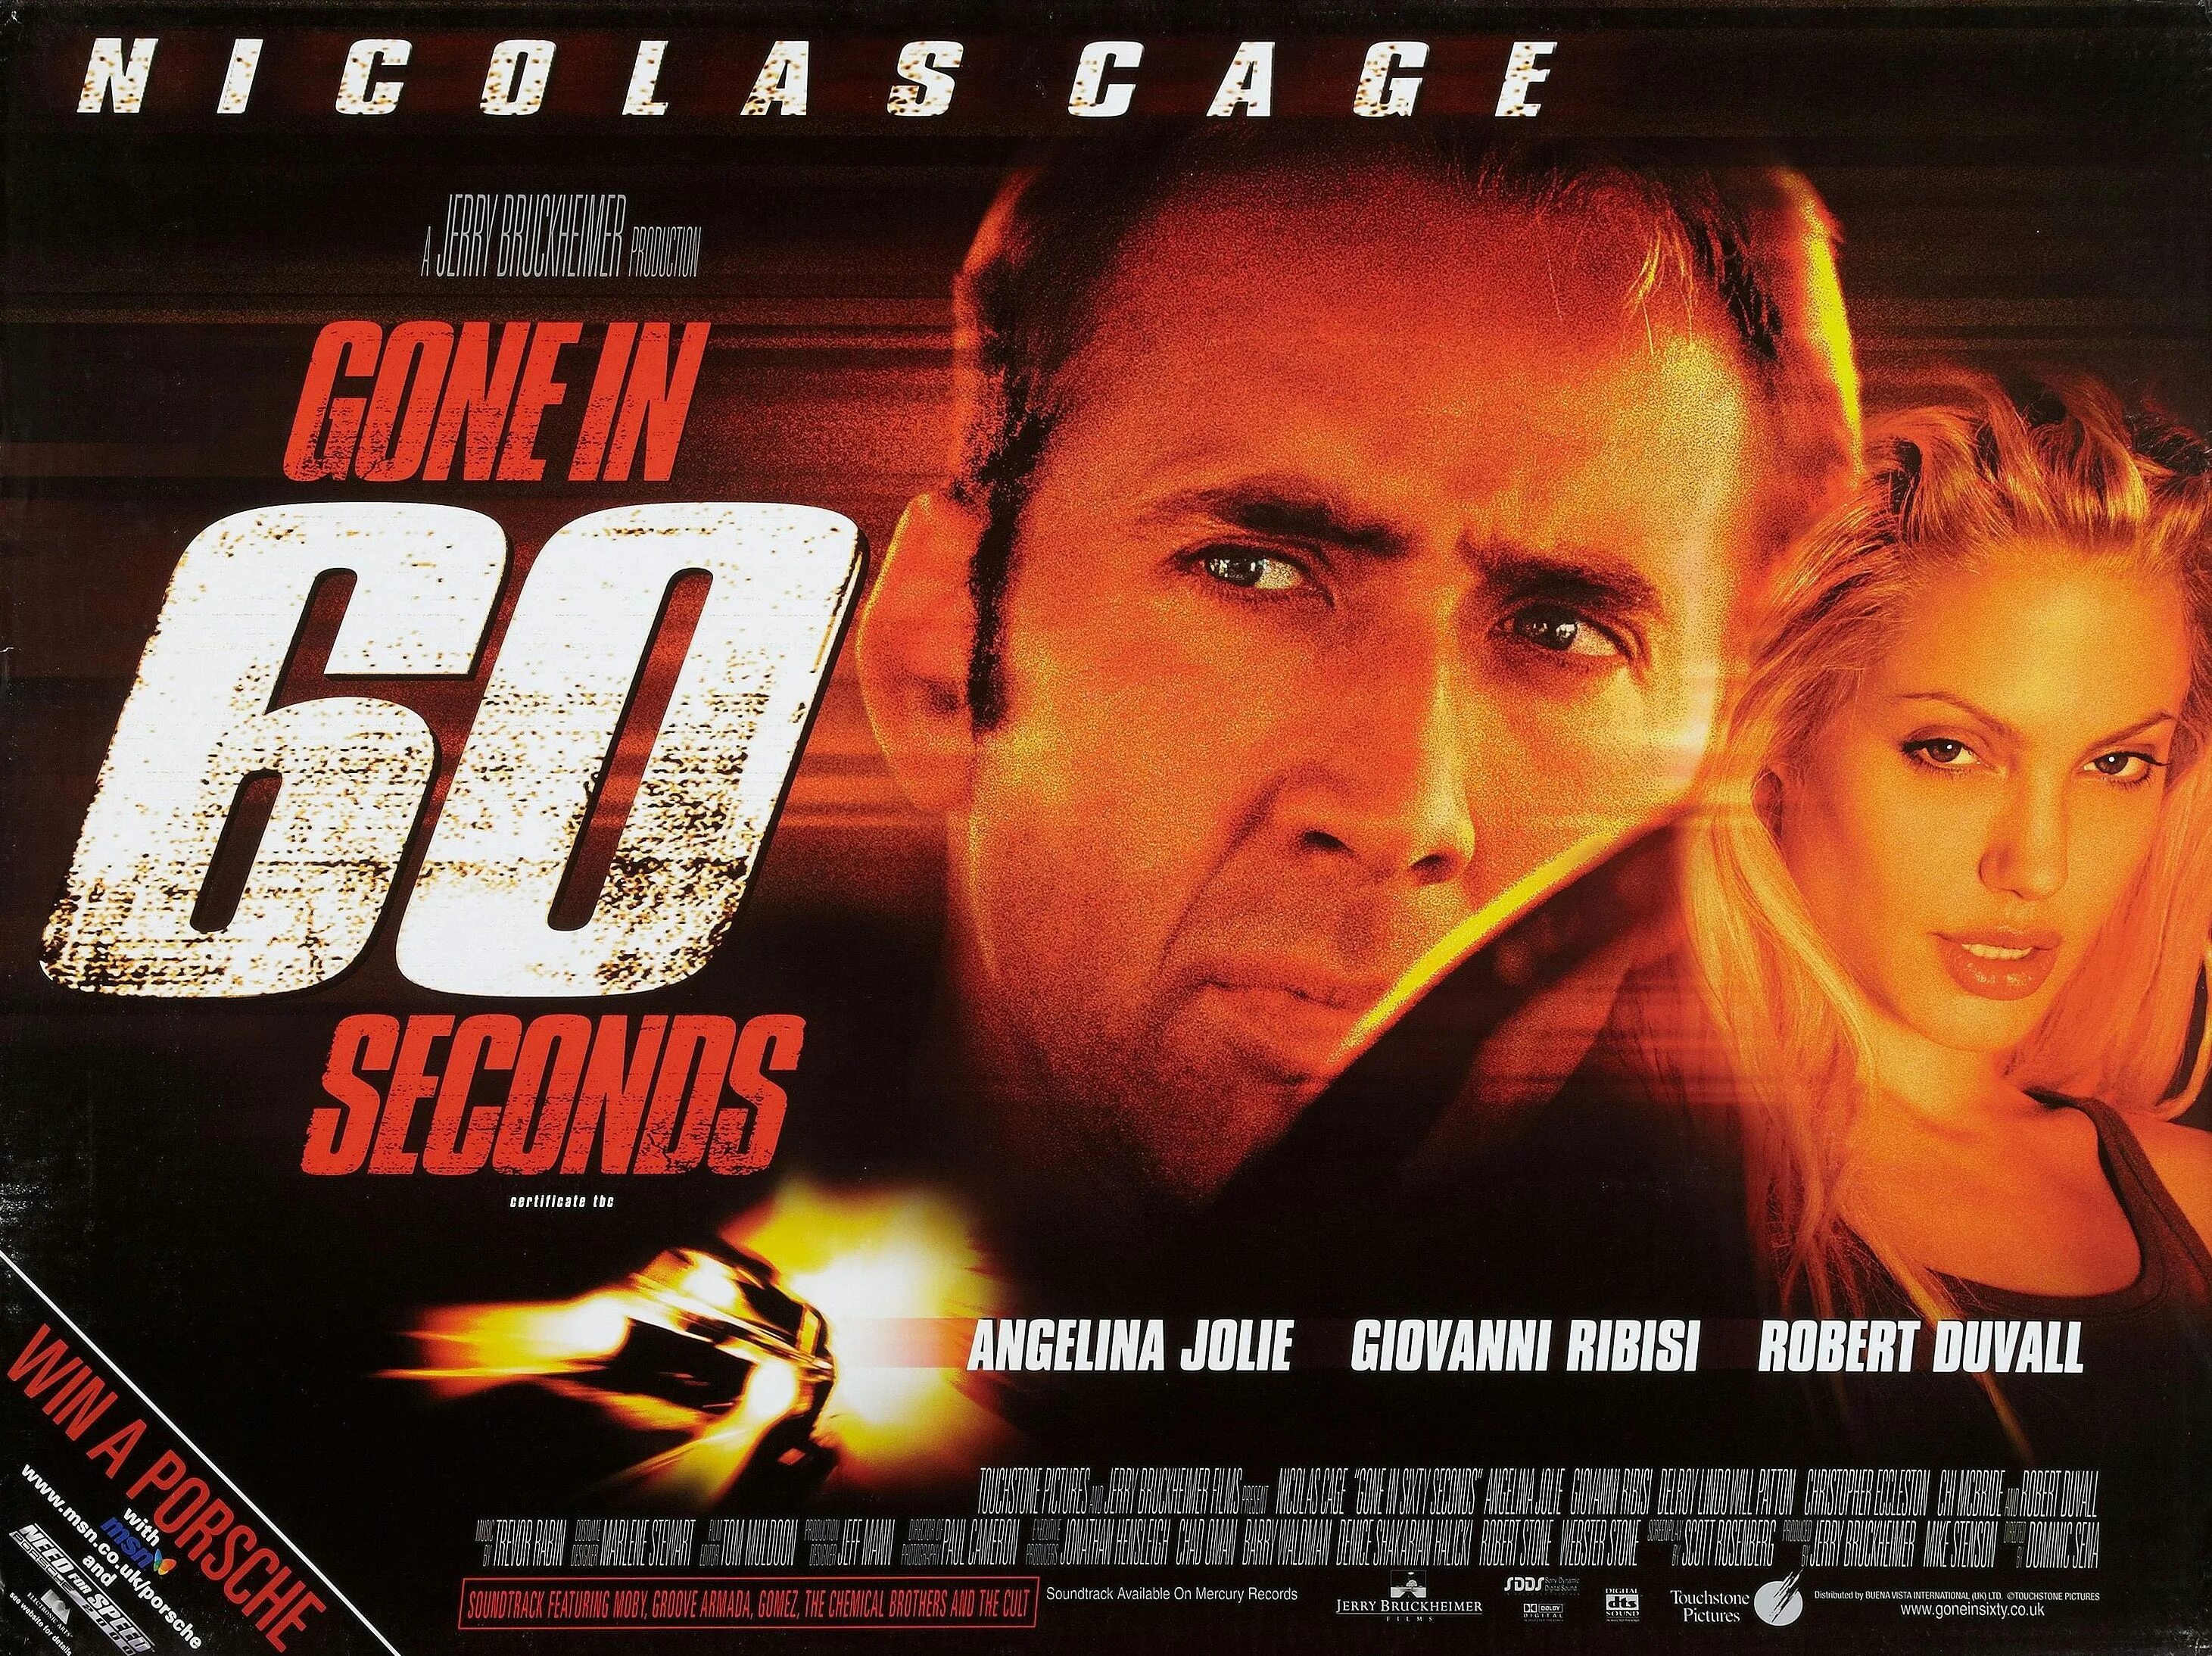 Gone in 1 second. Анджелина Джоли угнать за 60 секунд. Скотт Каан угнать за 60 секунд. Угнать за 60 секунд 1989.